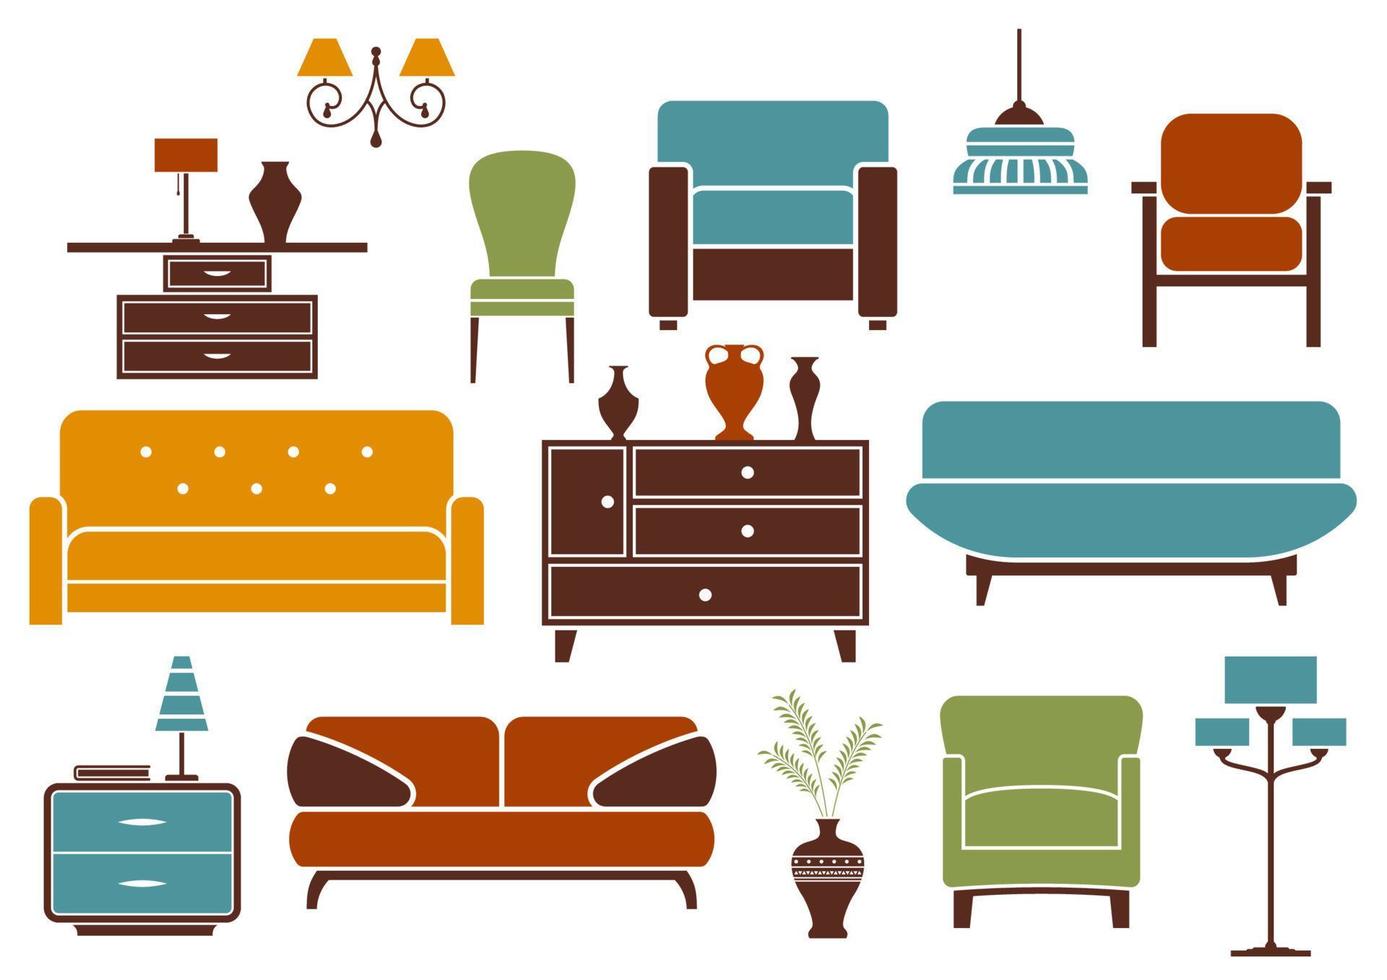 Furniture and interior design elements vector